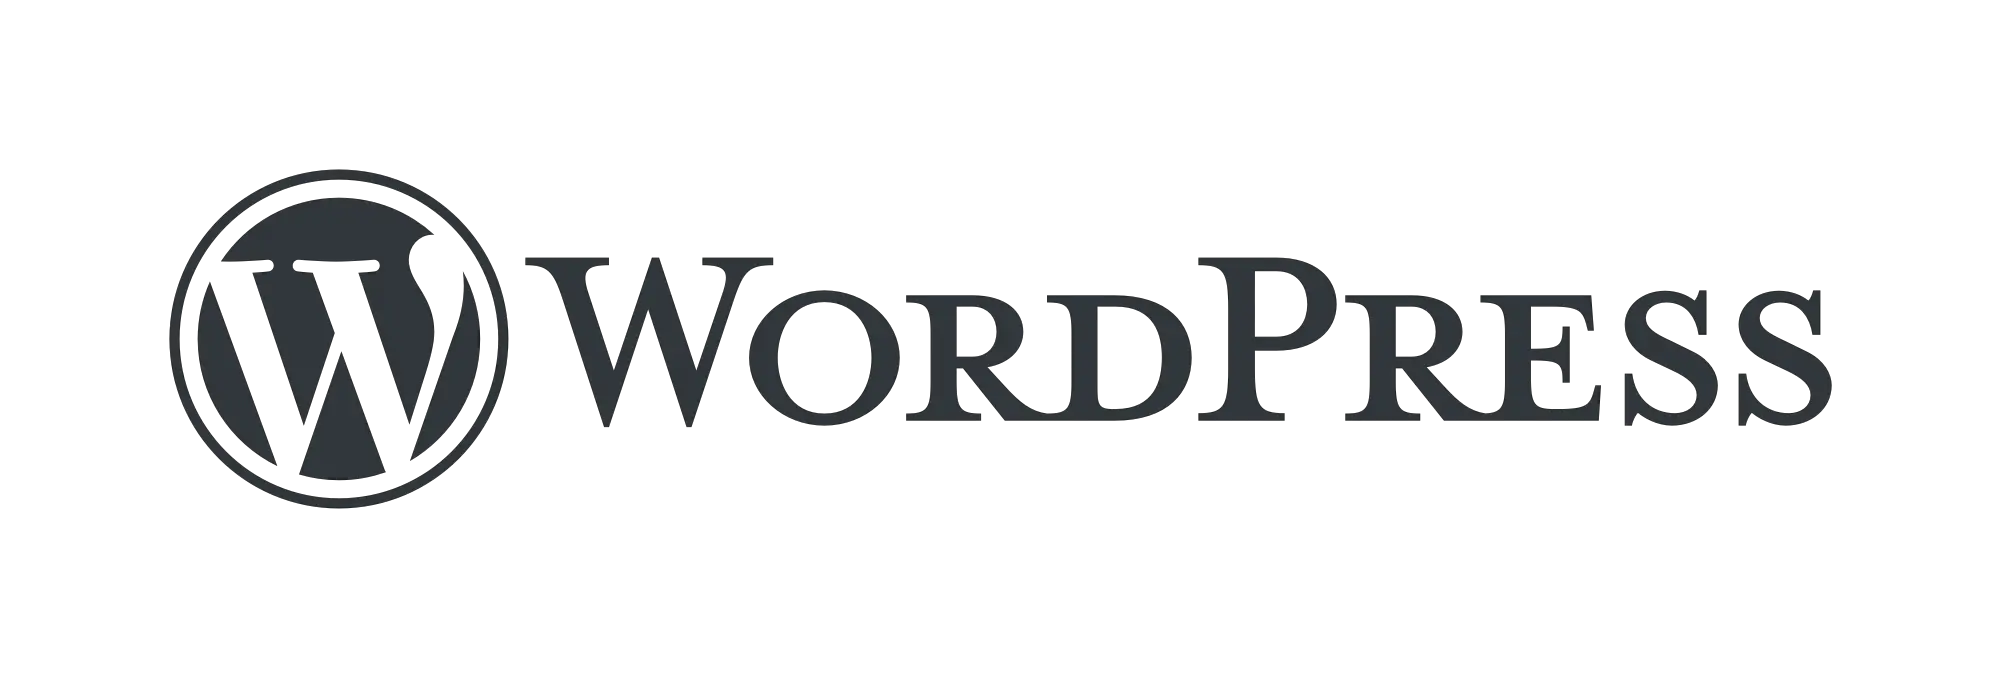 wordpress official logo